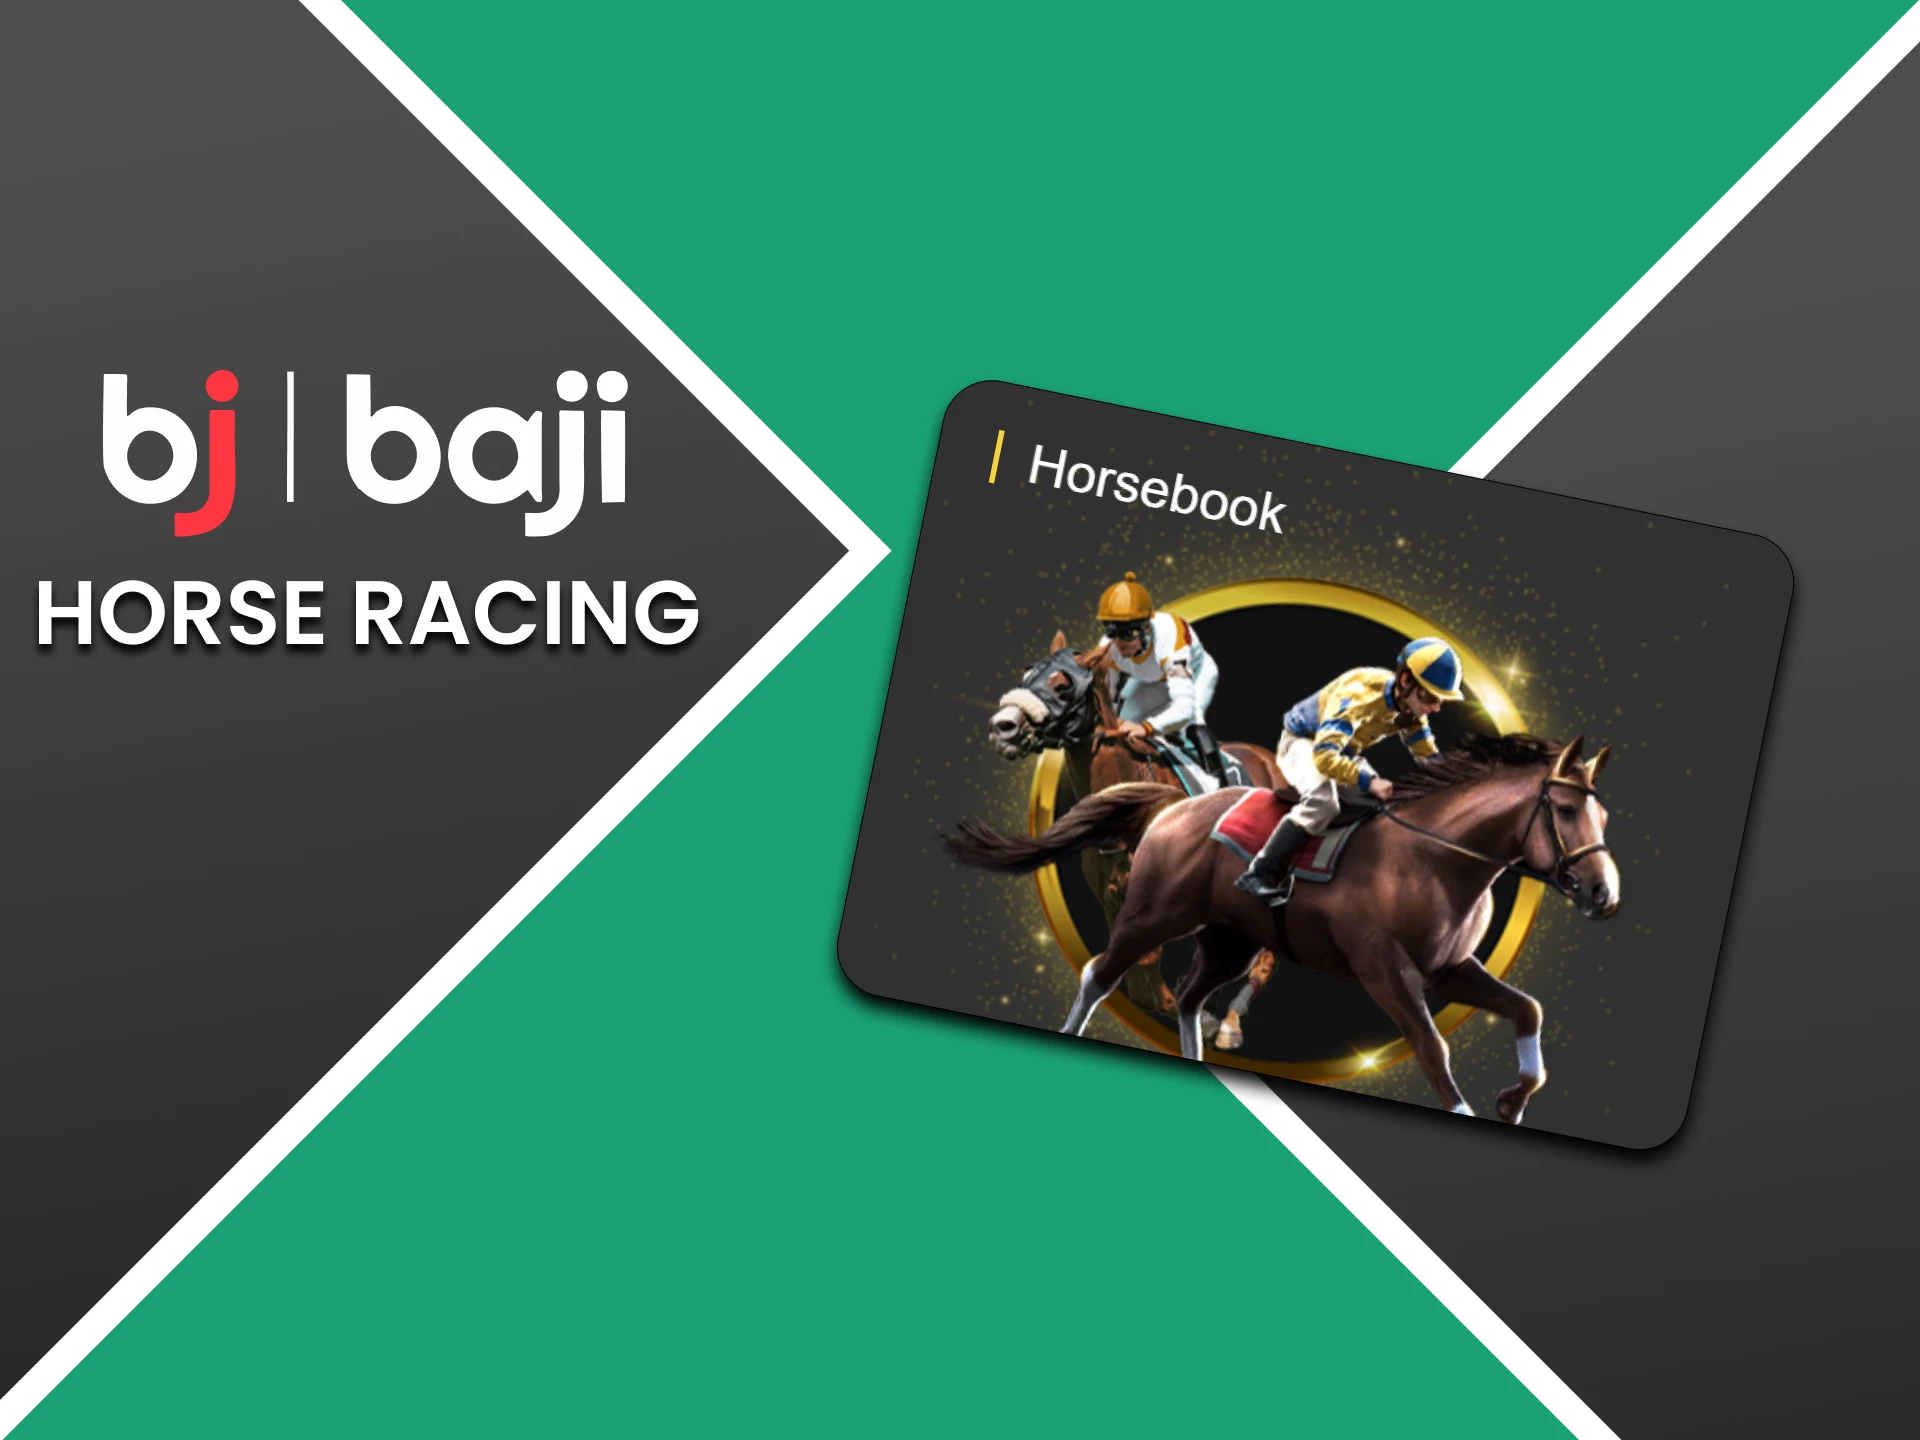 When betting on Baji, choose horse racing.